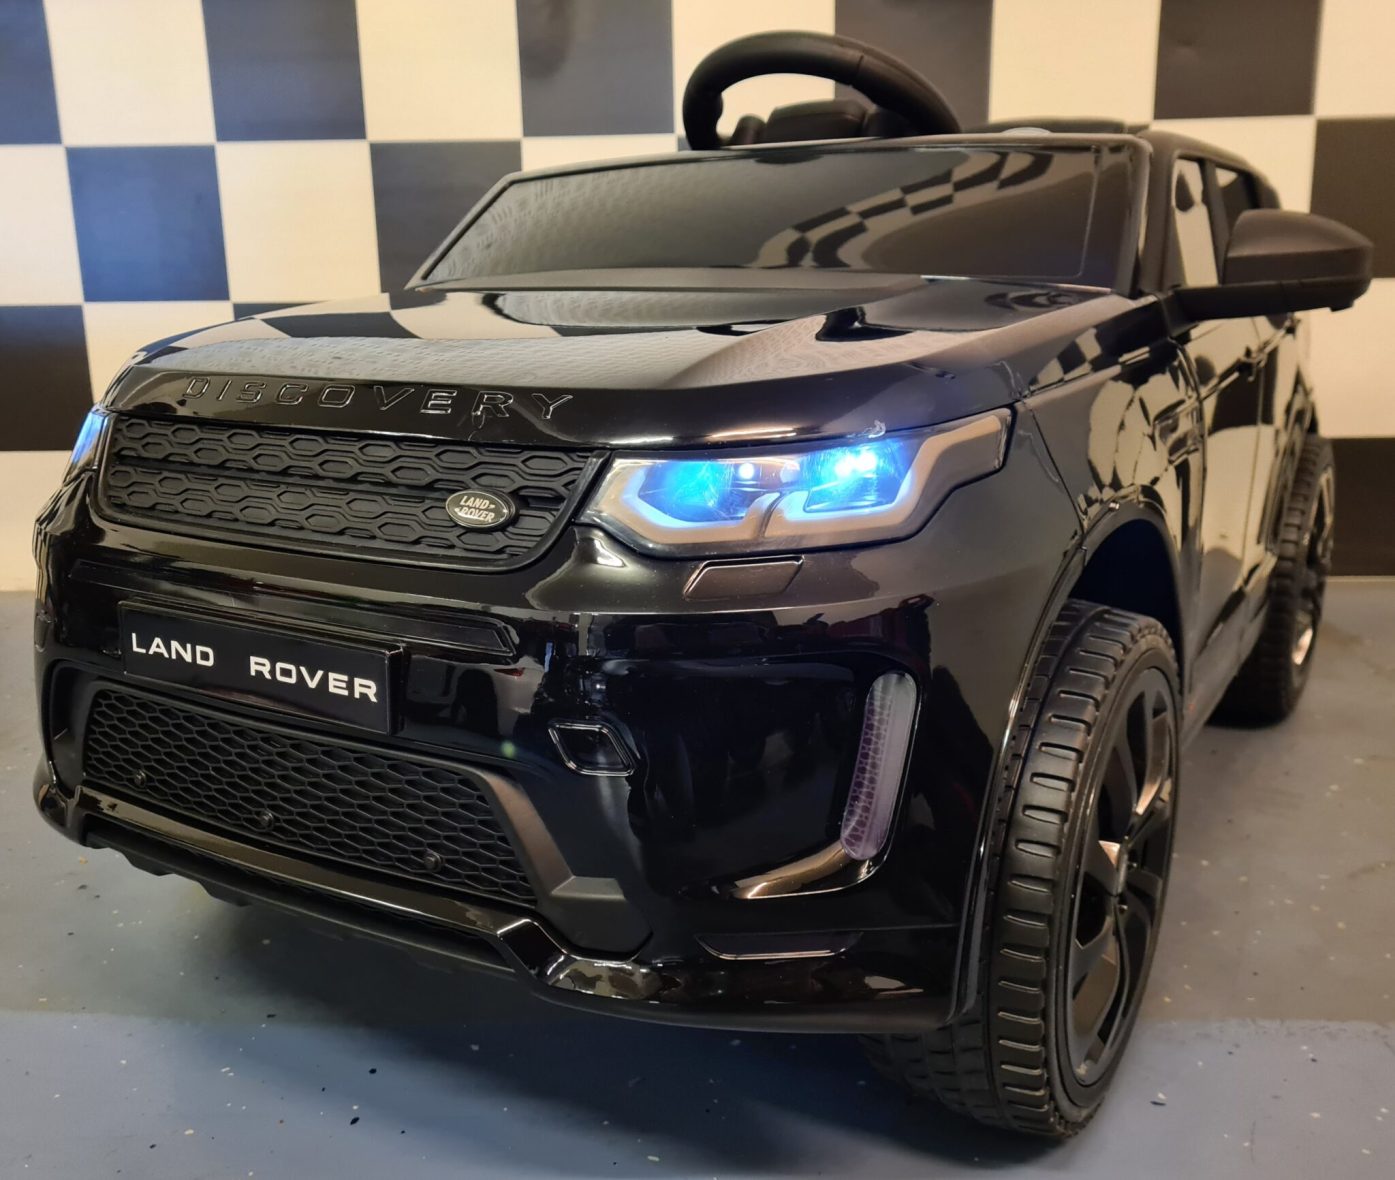 Battery Children’s Car Land Rover Discovery 12 Volt Paint Black